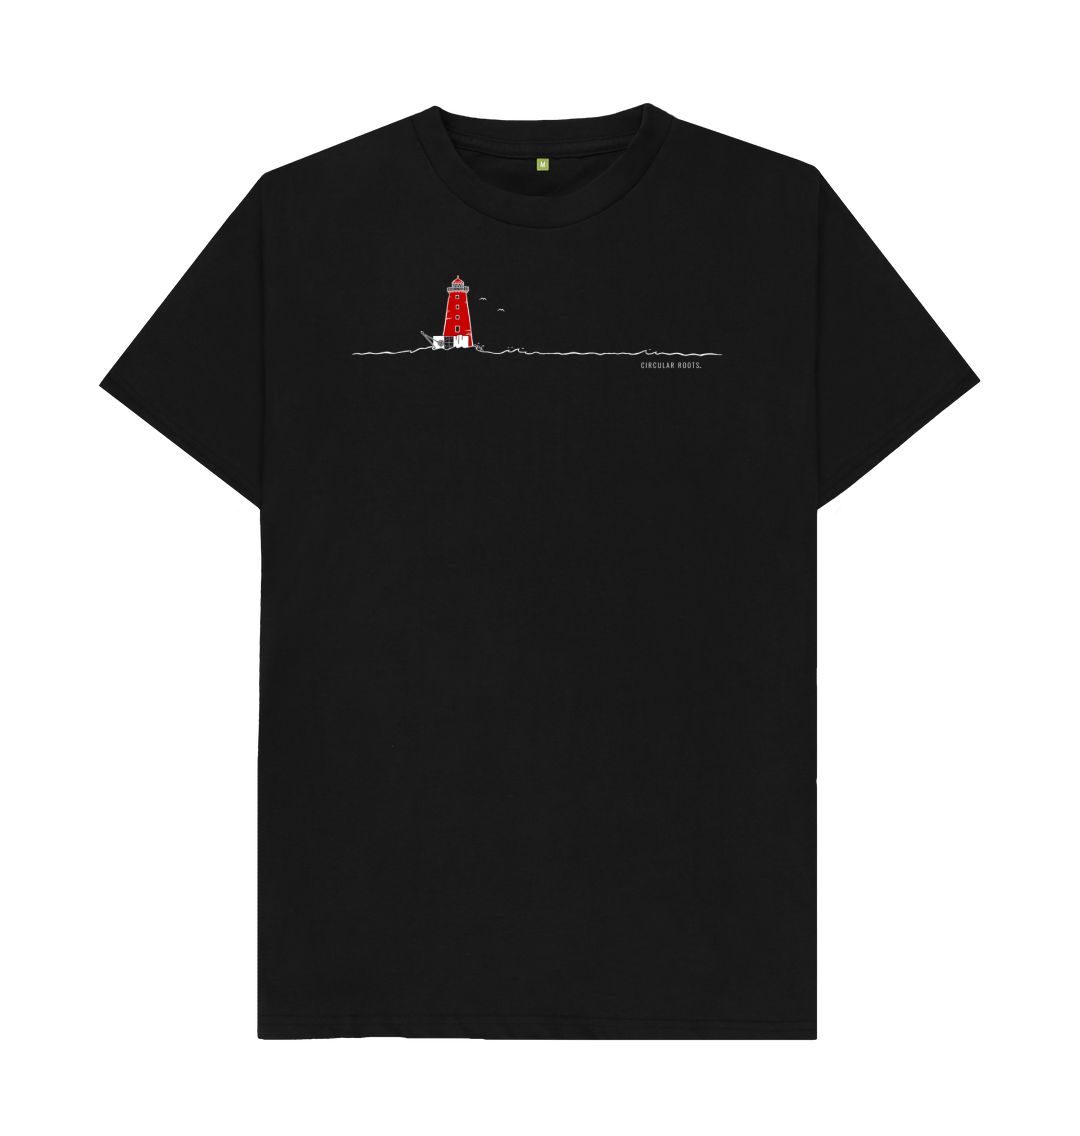 Black Poolbeg Lighthouse t-shirt